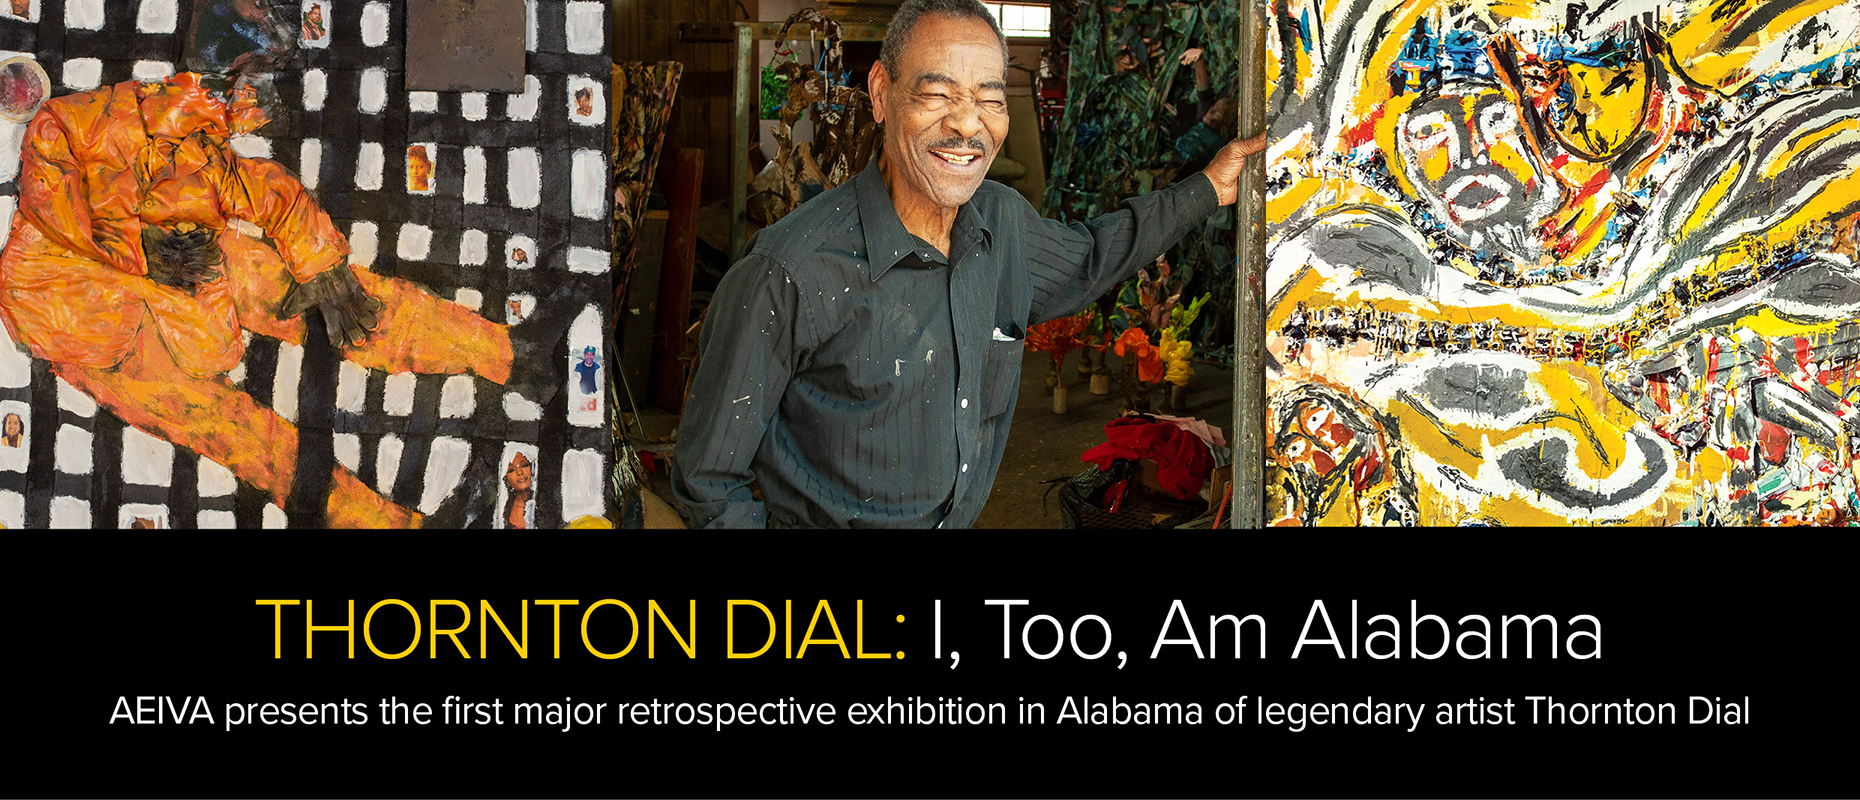 Thornton Dial: I, Too, Am Alabama. AEIVA presents the first major retrospective exhibition in Alabama of legendary artist Thornton Dial.